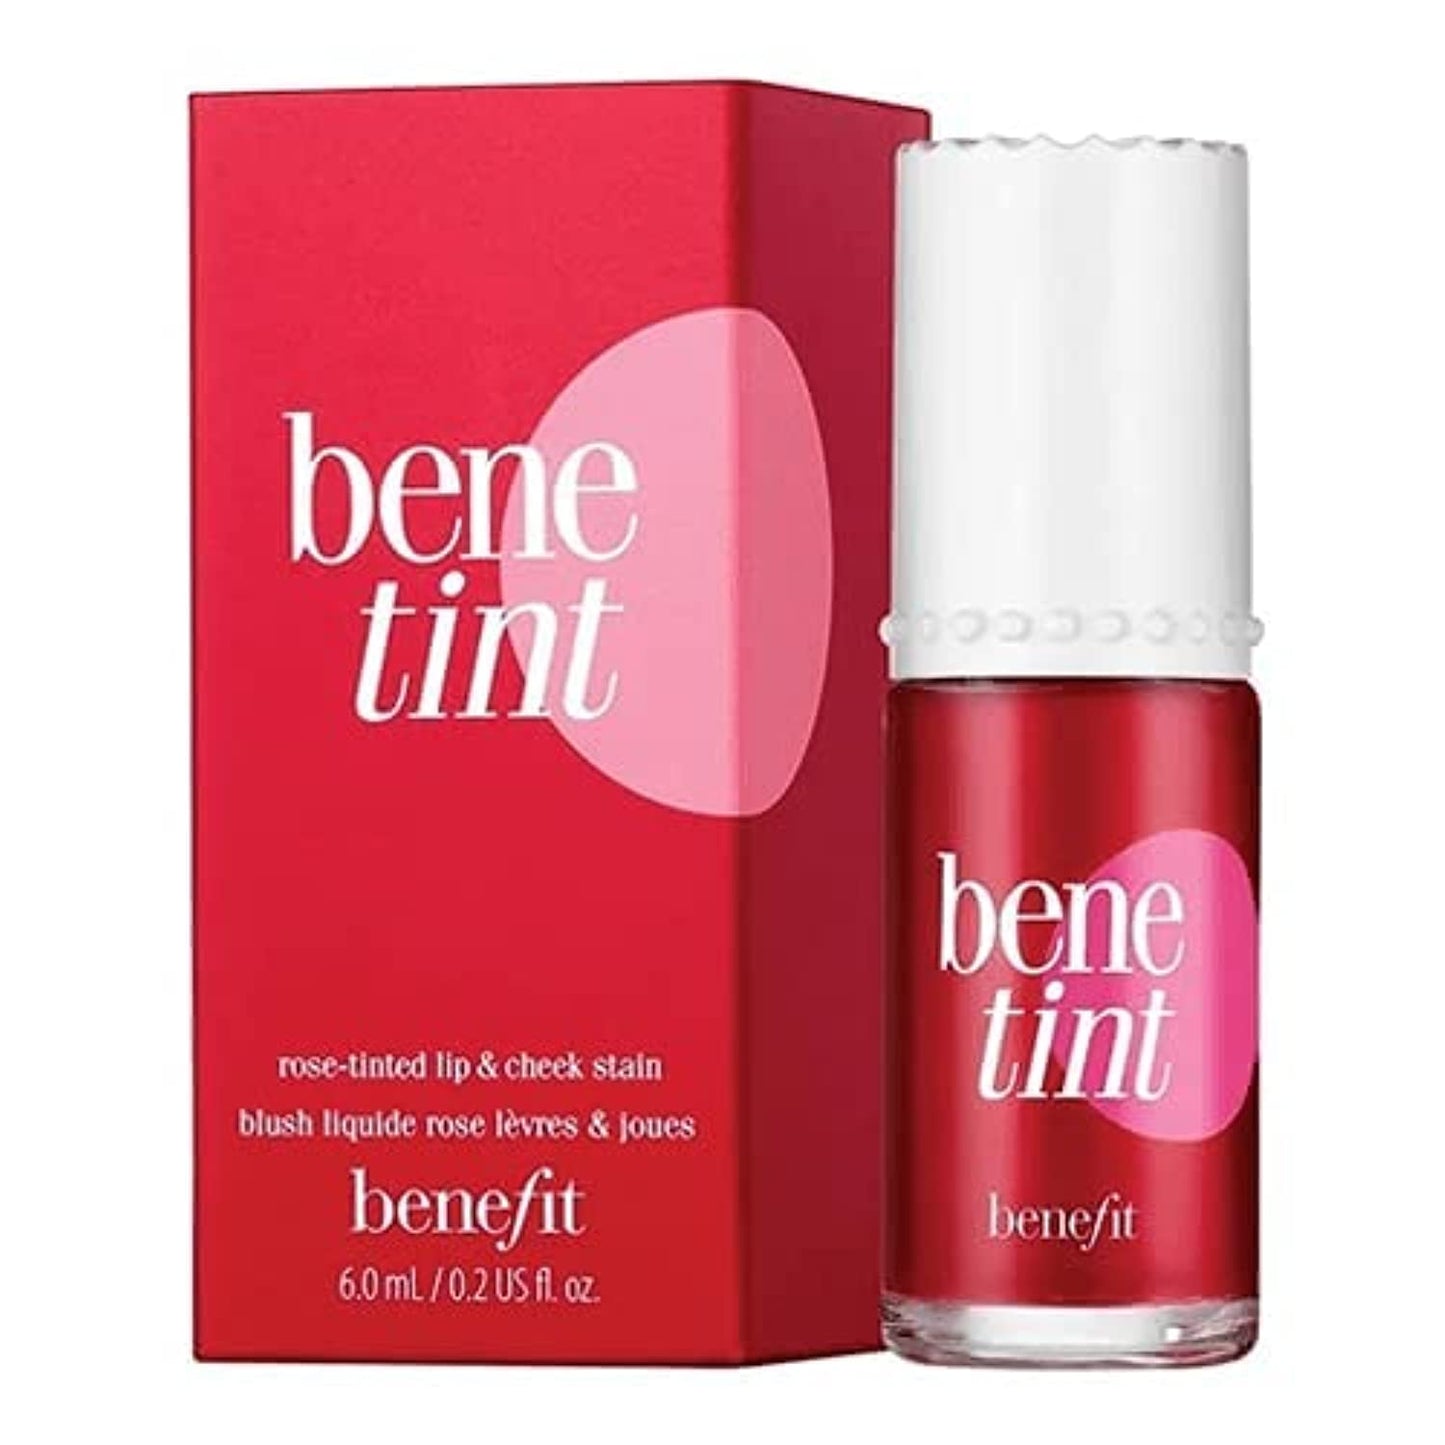 Benefit Bene Tint Rose-tinted Lip & Cheek Stain